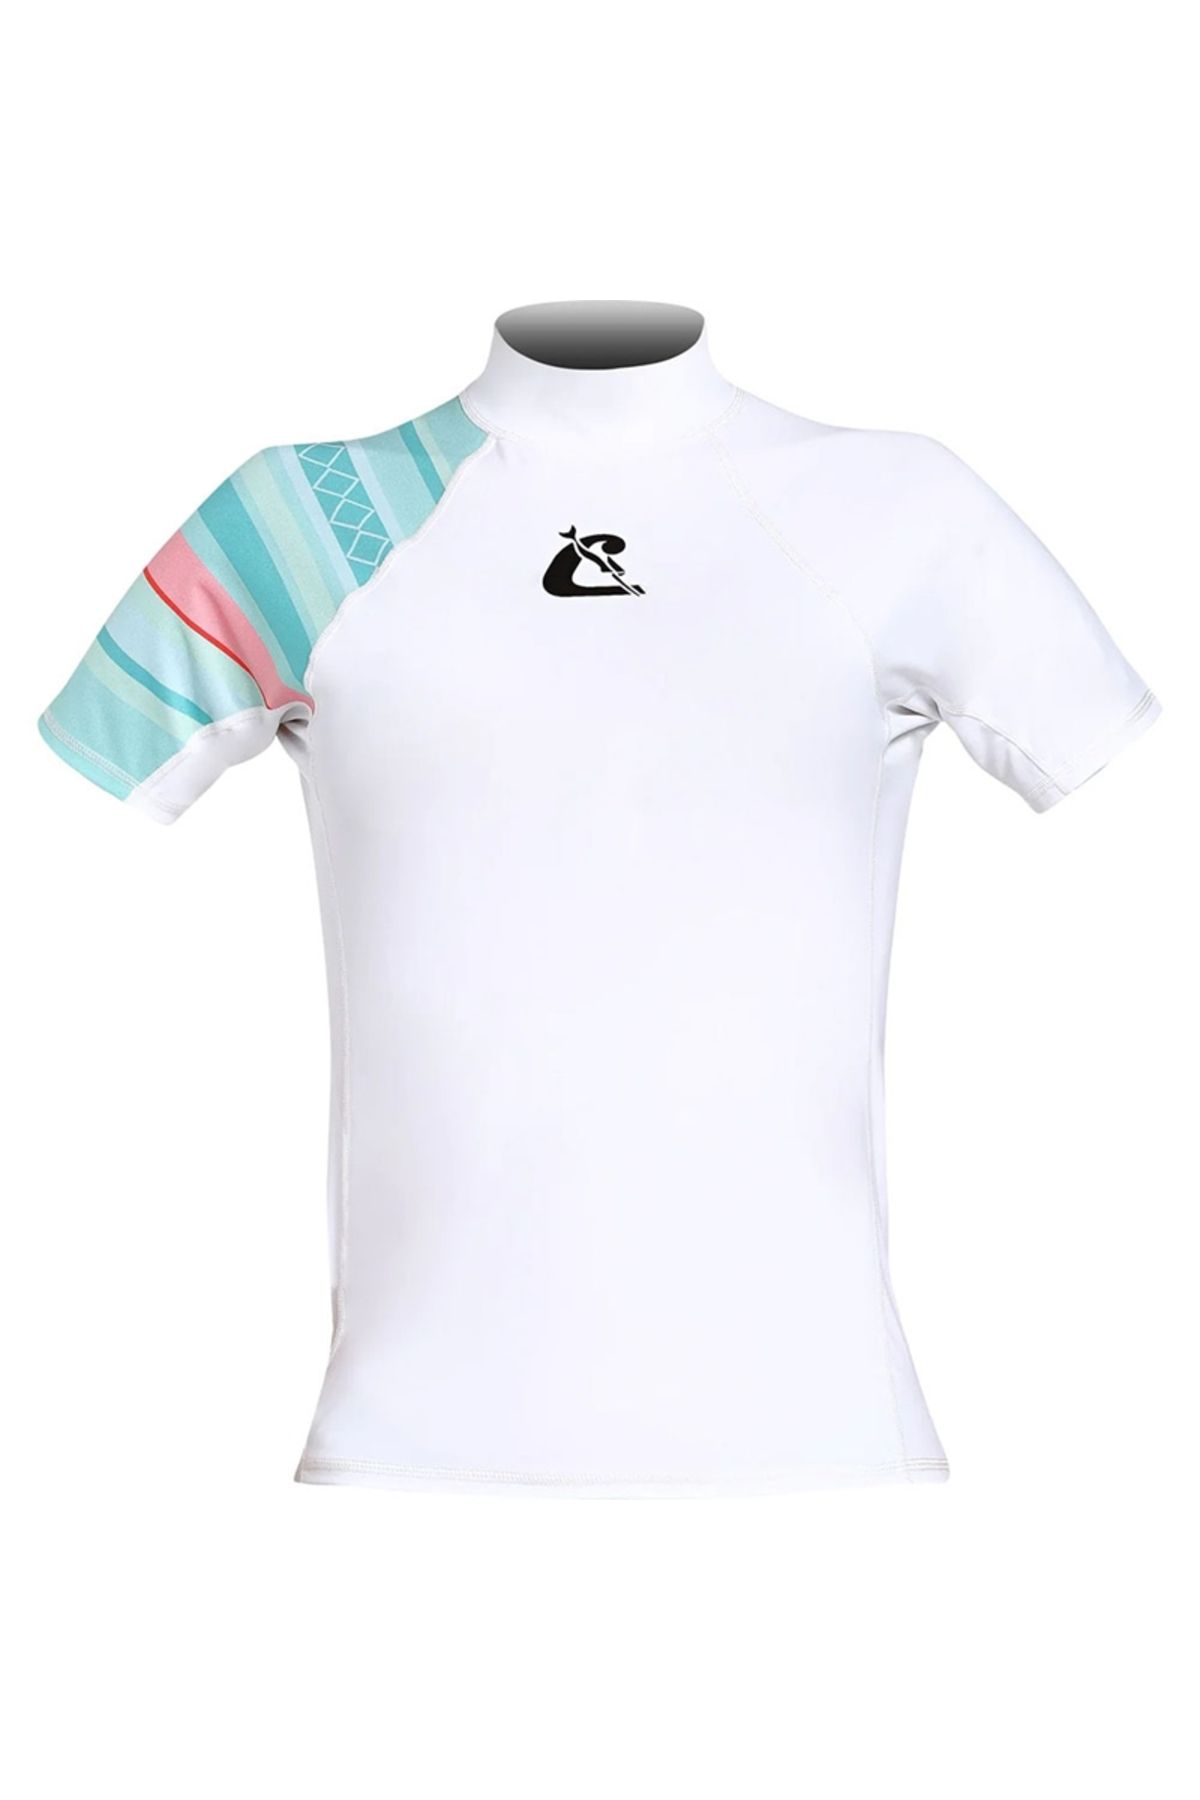 cressi sub Shield Rash Guard Lady T-Shirt WHITE - AQUAMARINE-XS - NO:1